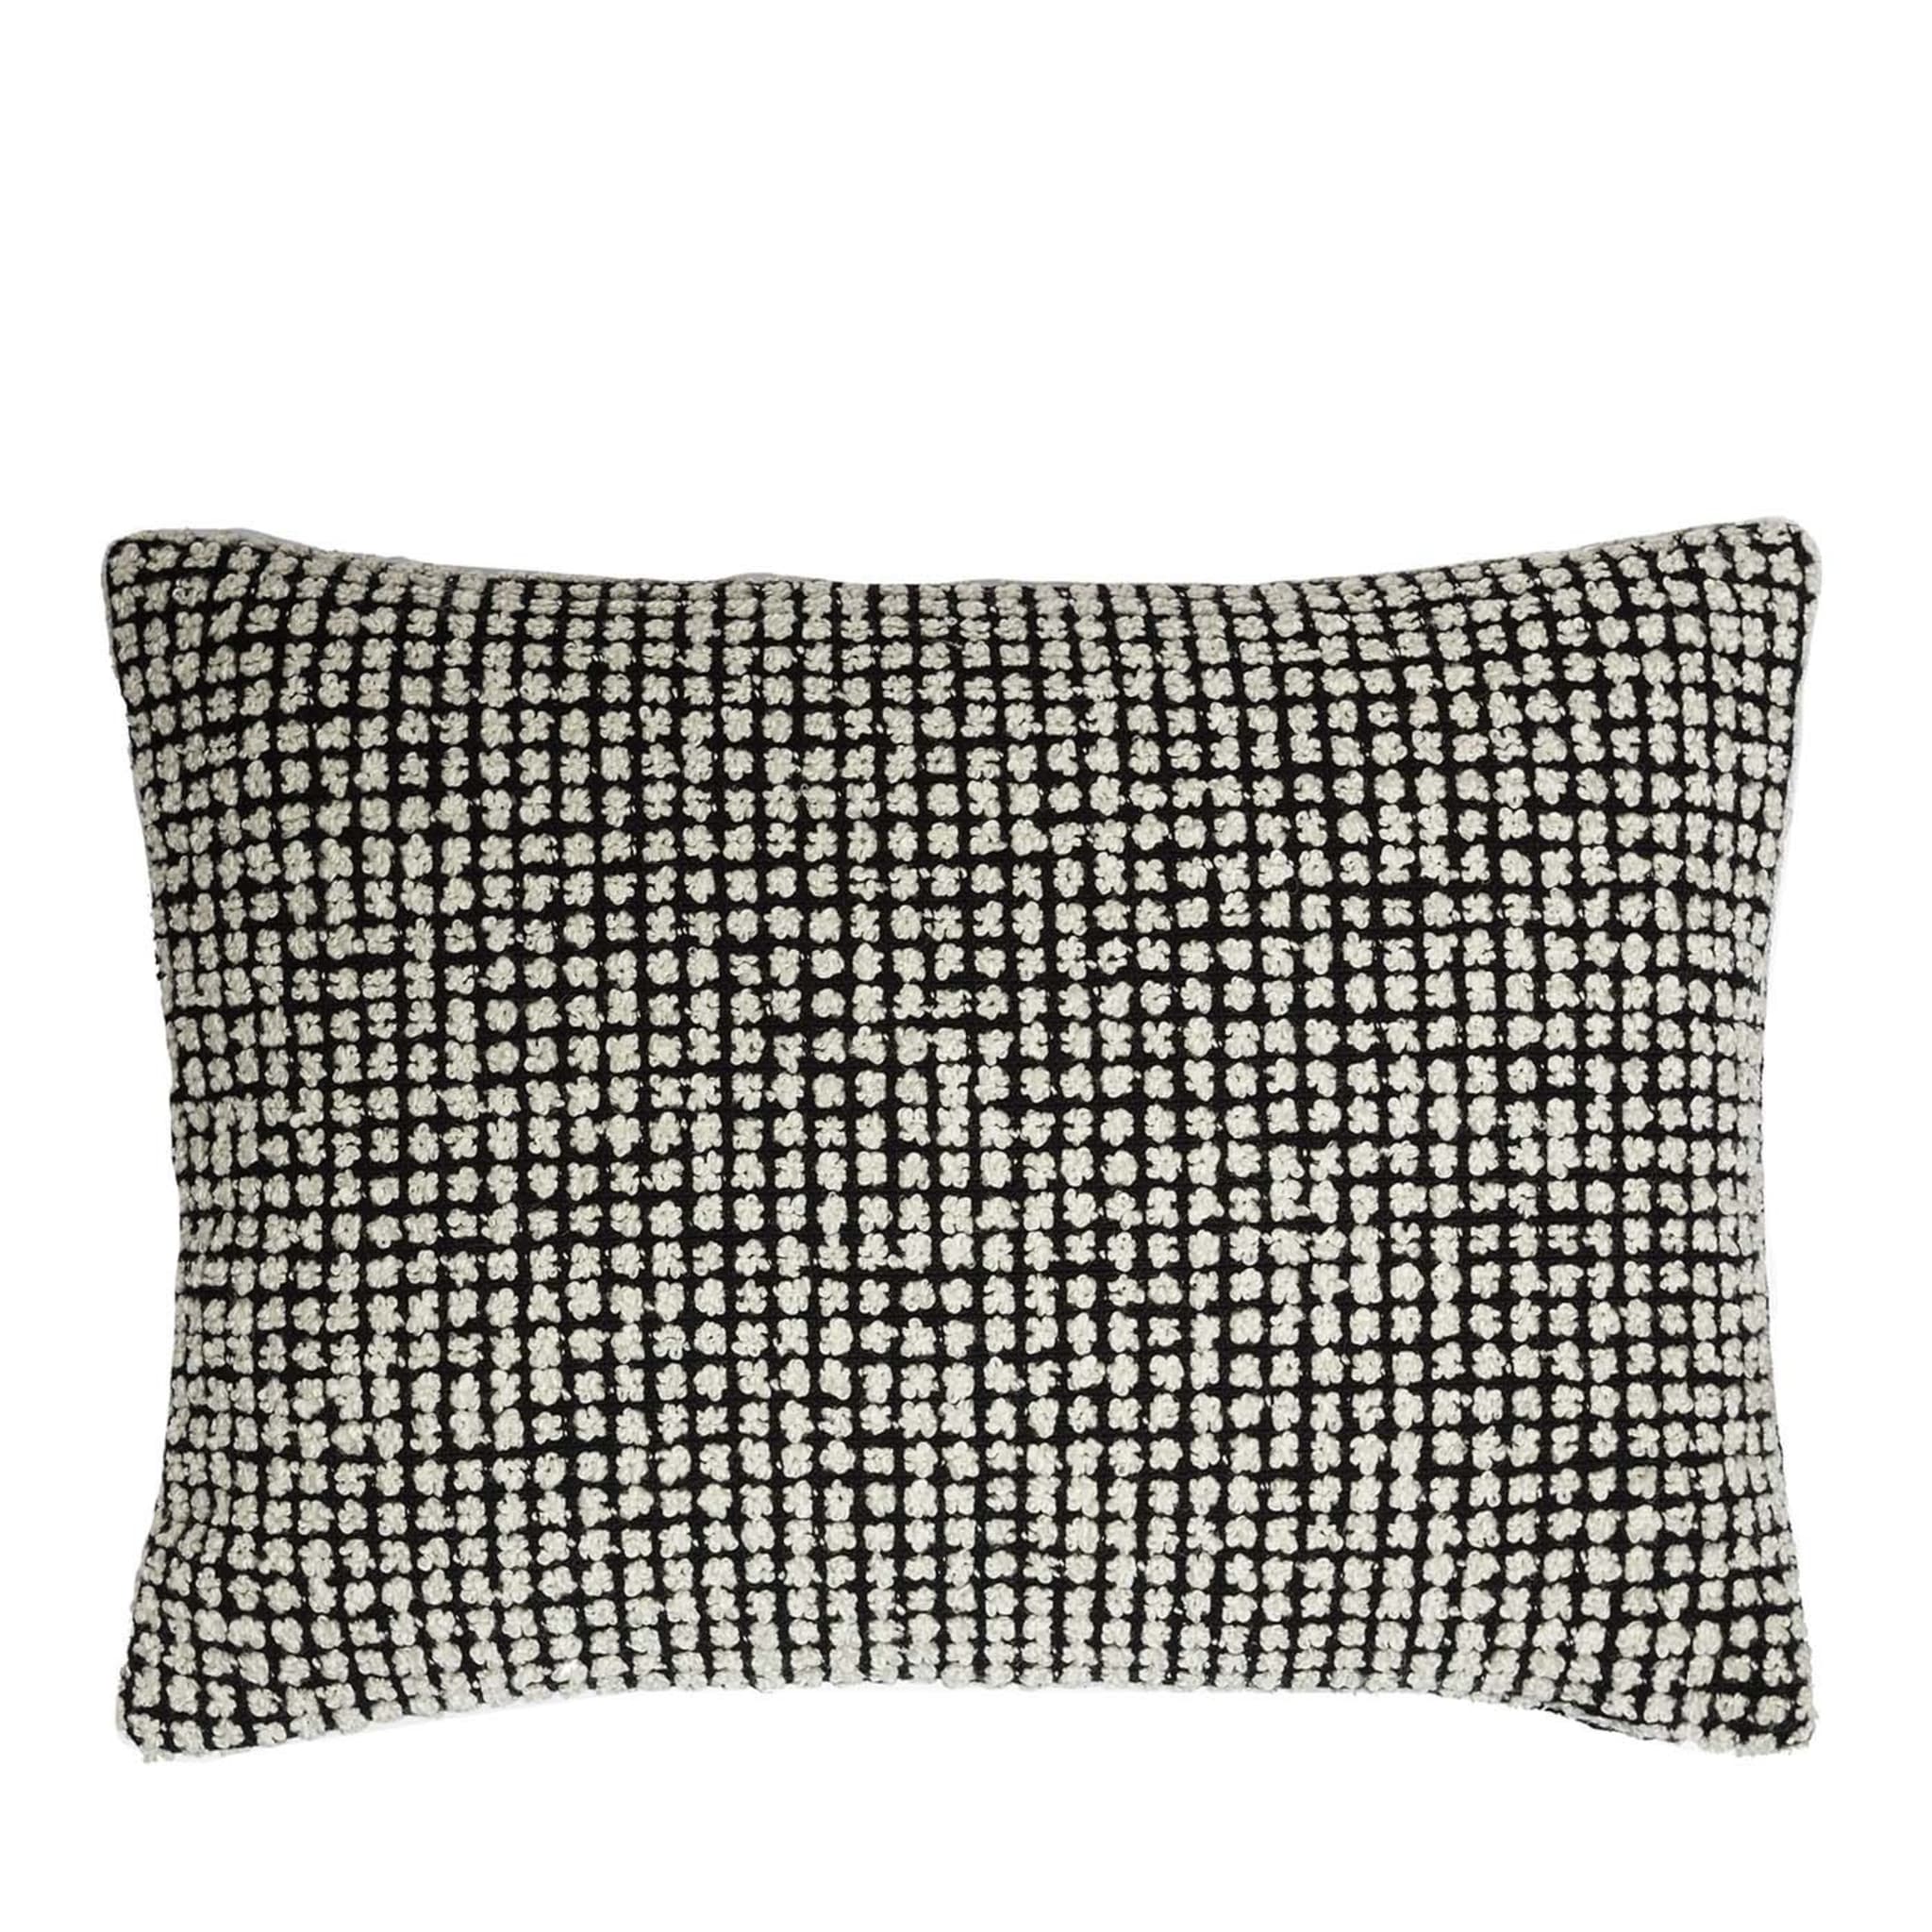 Lochanel Black-and-White Rectangular Cushion - Main view